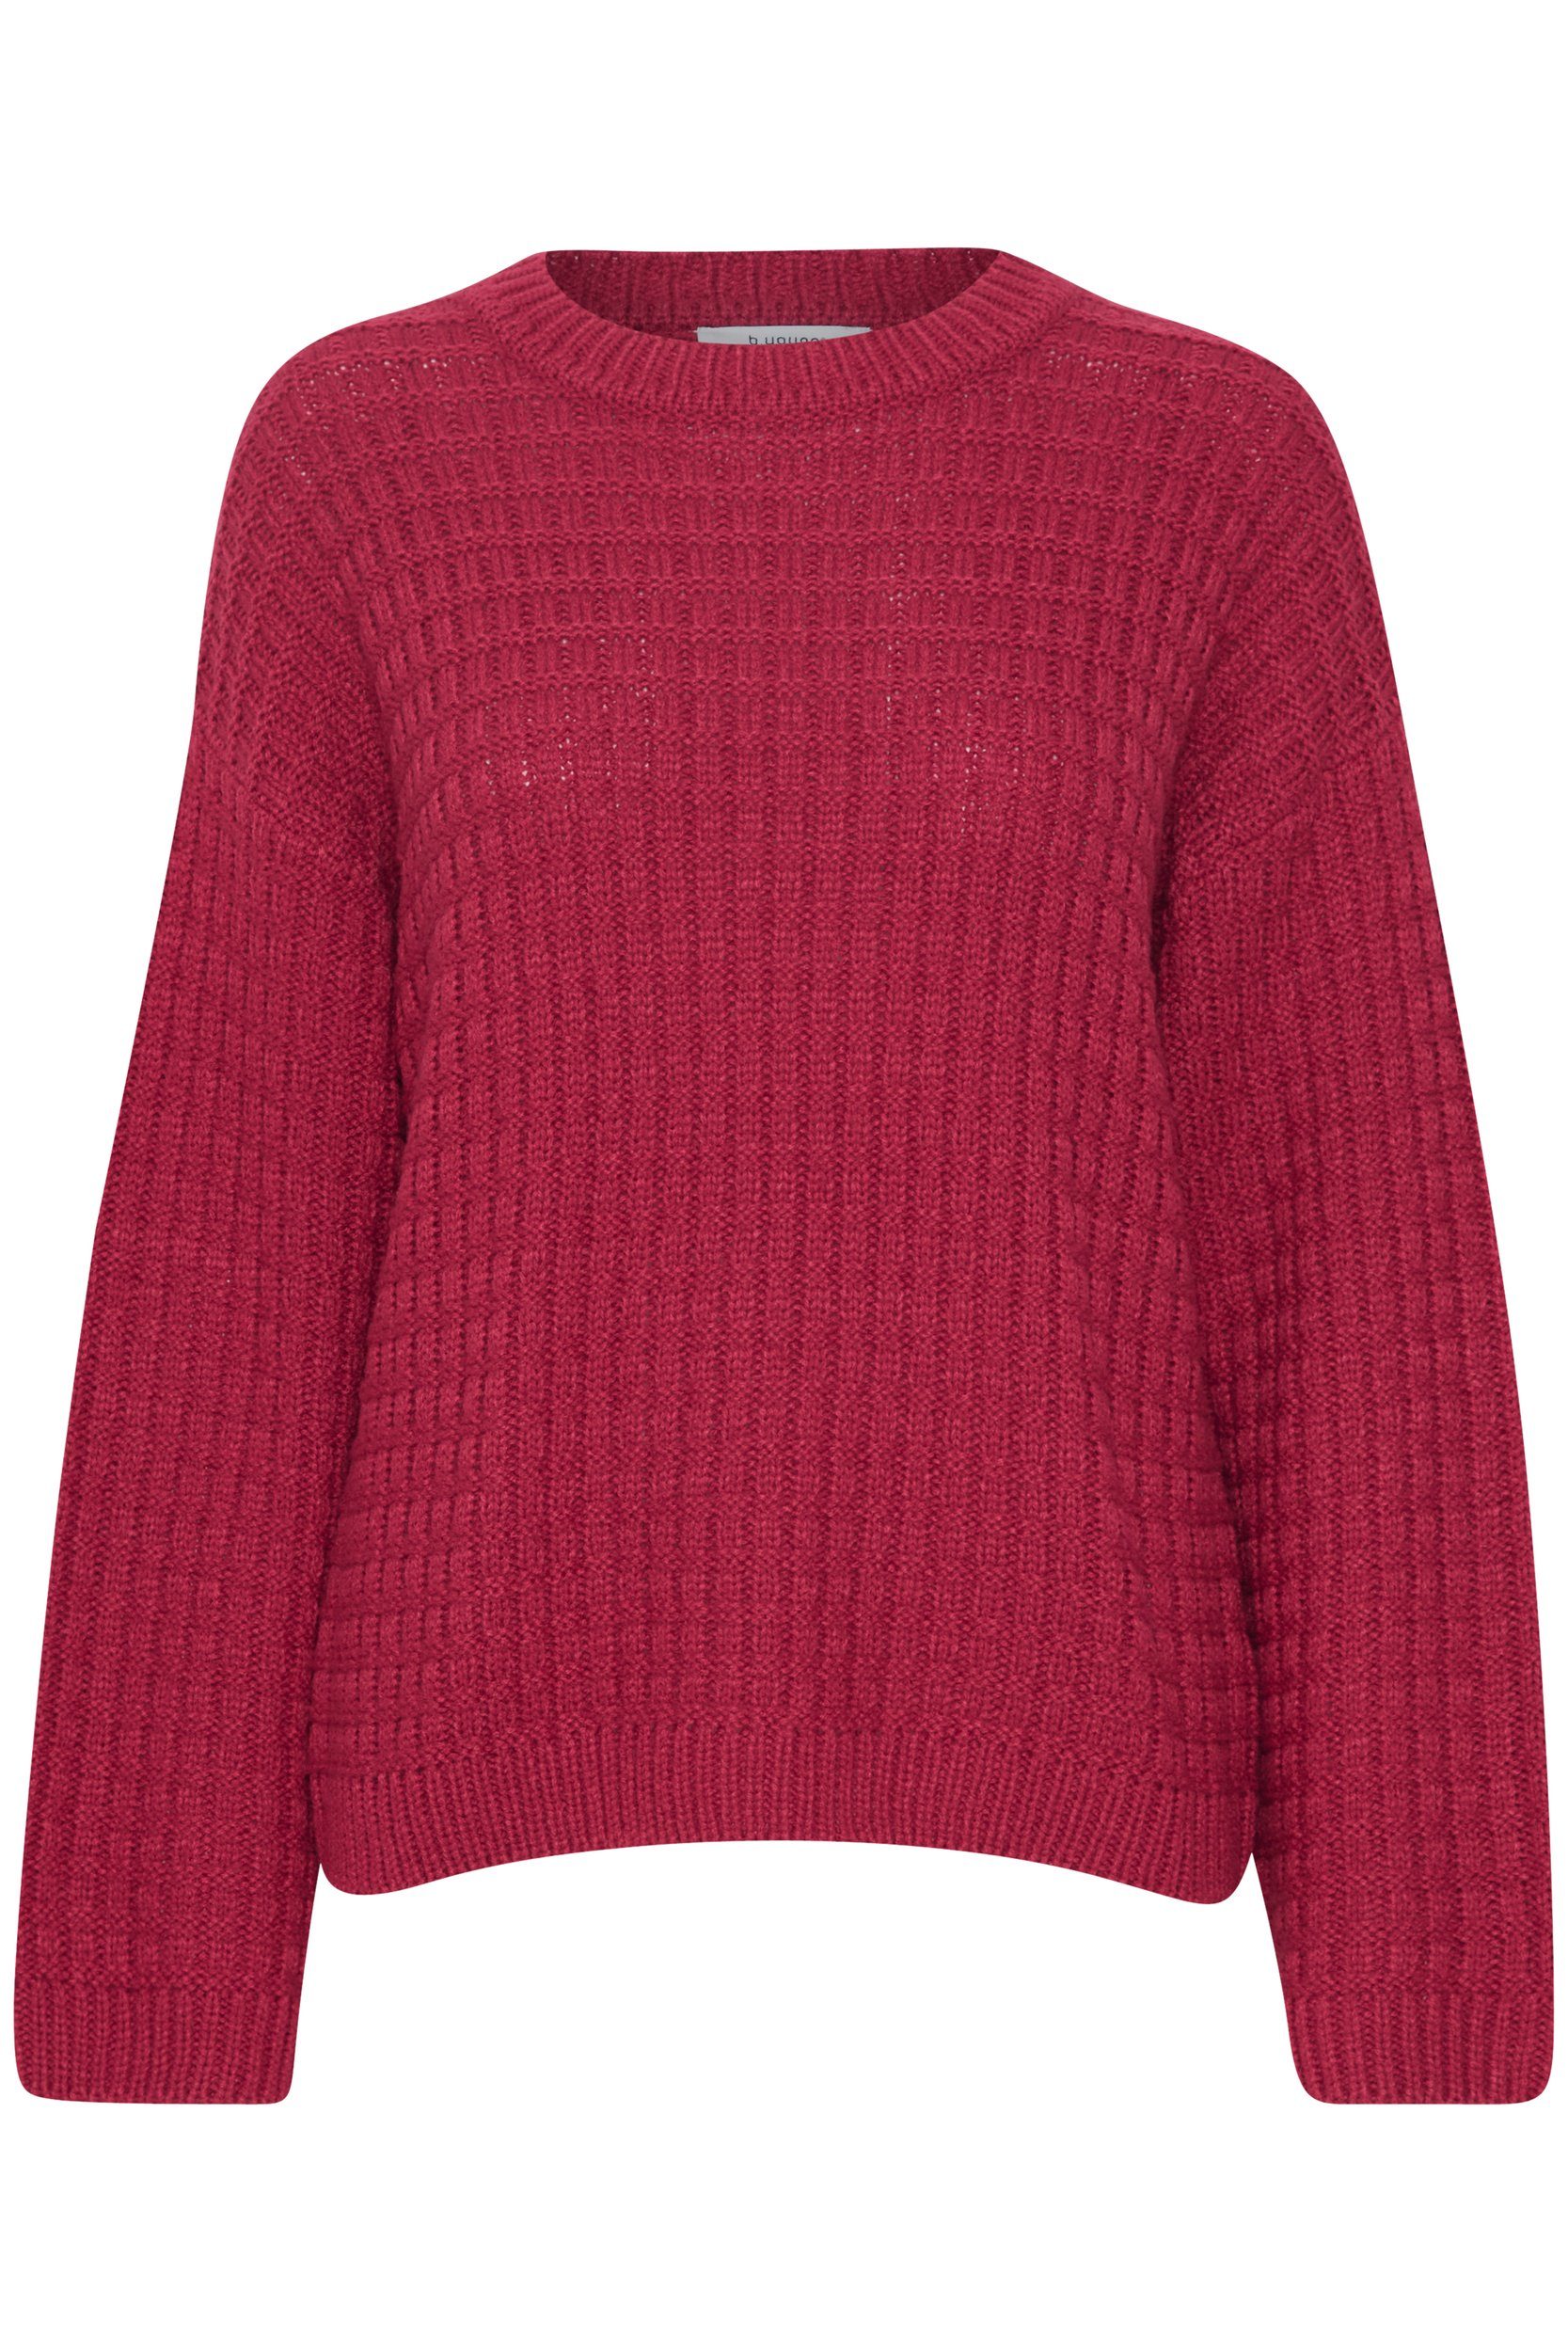 b.young Strickpullover Grobstrick Pullover Sweater mit Abgesetzten Schultern 6664 in Rot